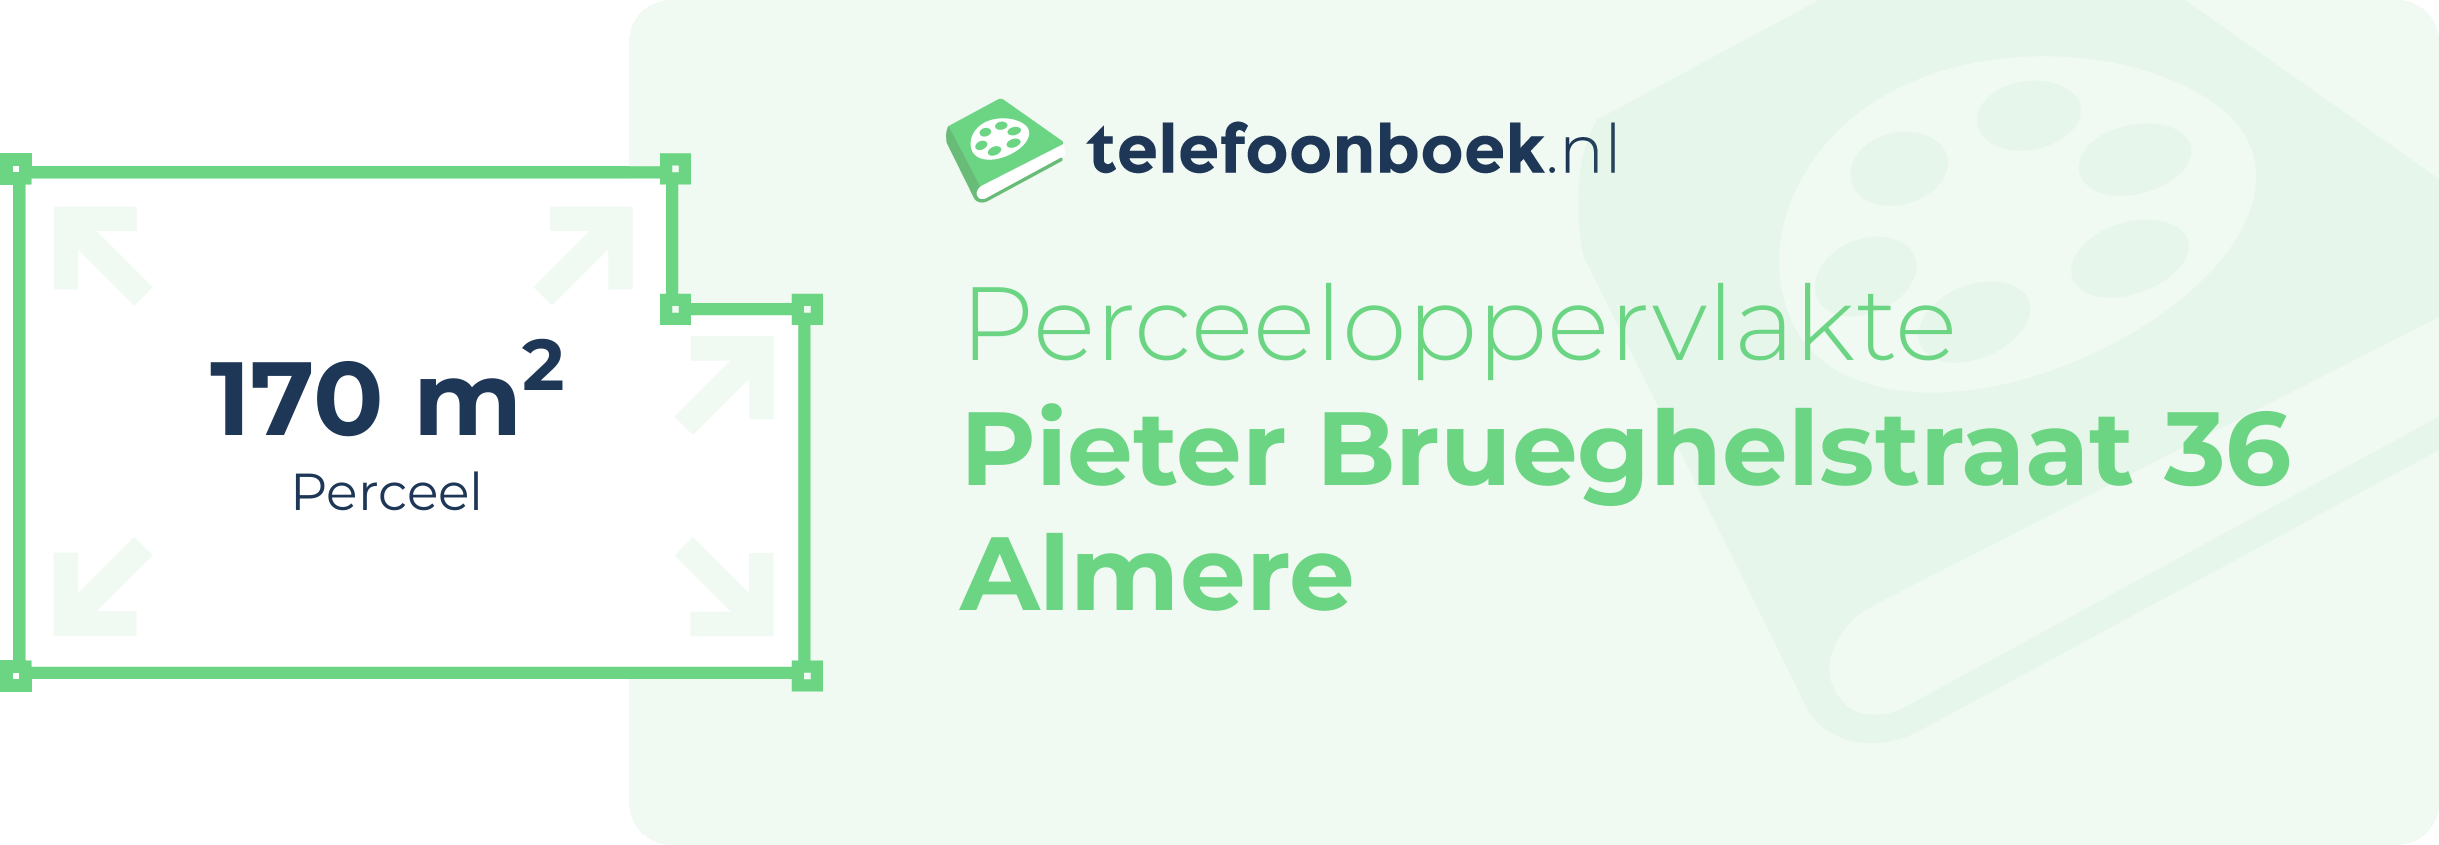 Perceeloppervlakte Pieter Brueghelstraat 36 Almere